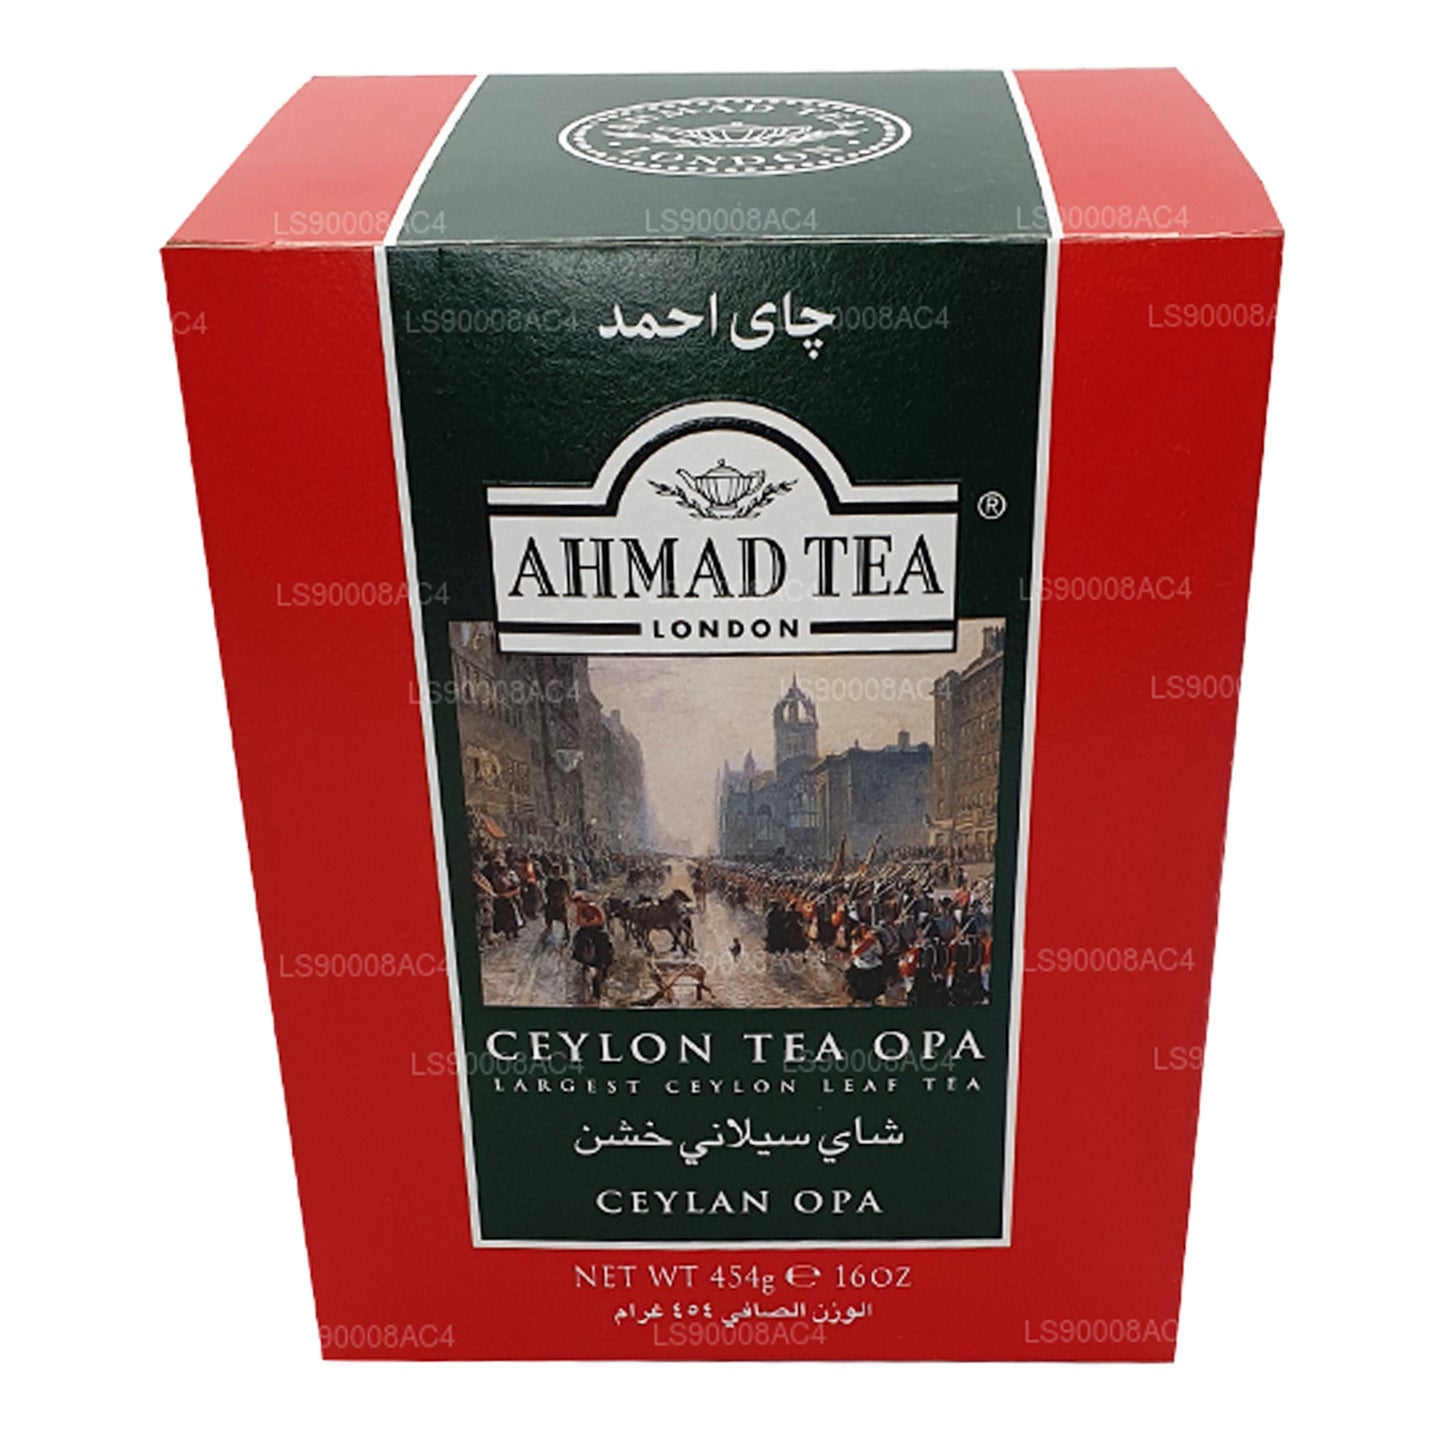 Ahmad Tea Цейлонский чай OPA, самый большой цейлонский листовой чай (454 г)